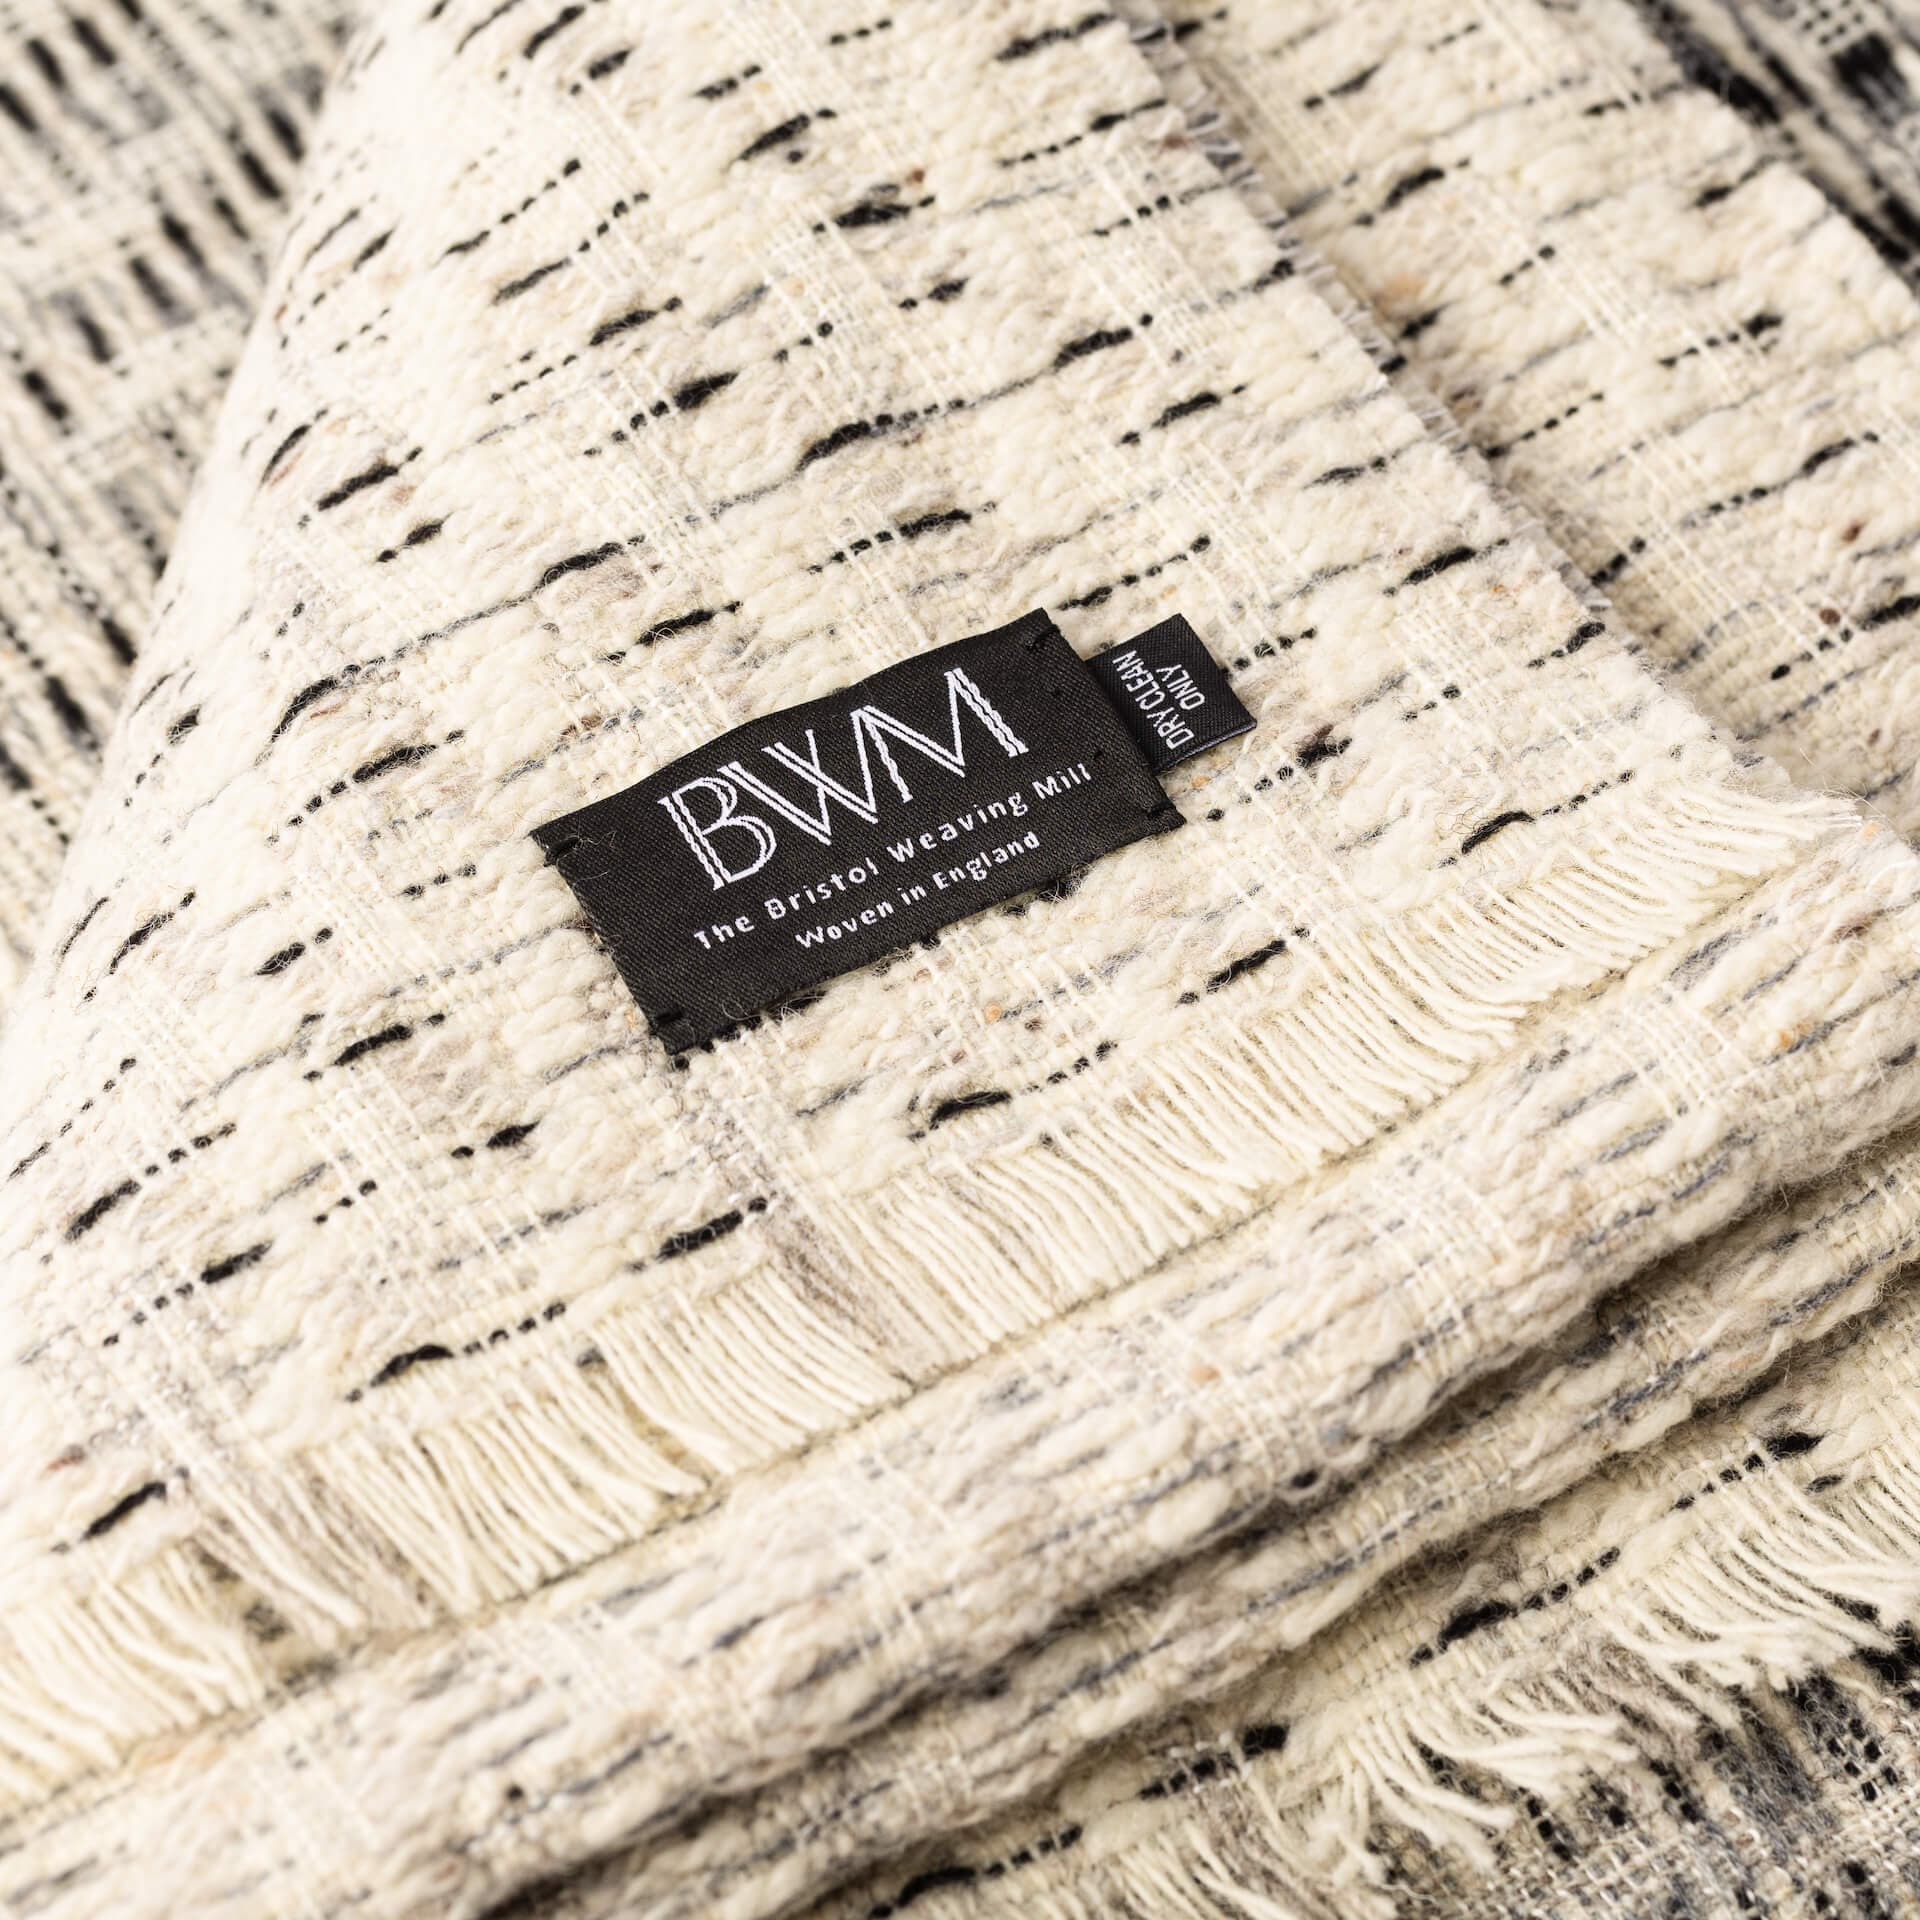 Bristol Weaving Mill Limited-edition Luxury Hand-woven Blanket - 'Black & Grey'